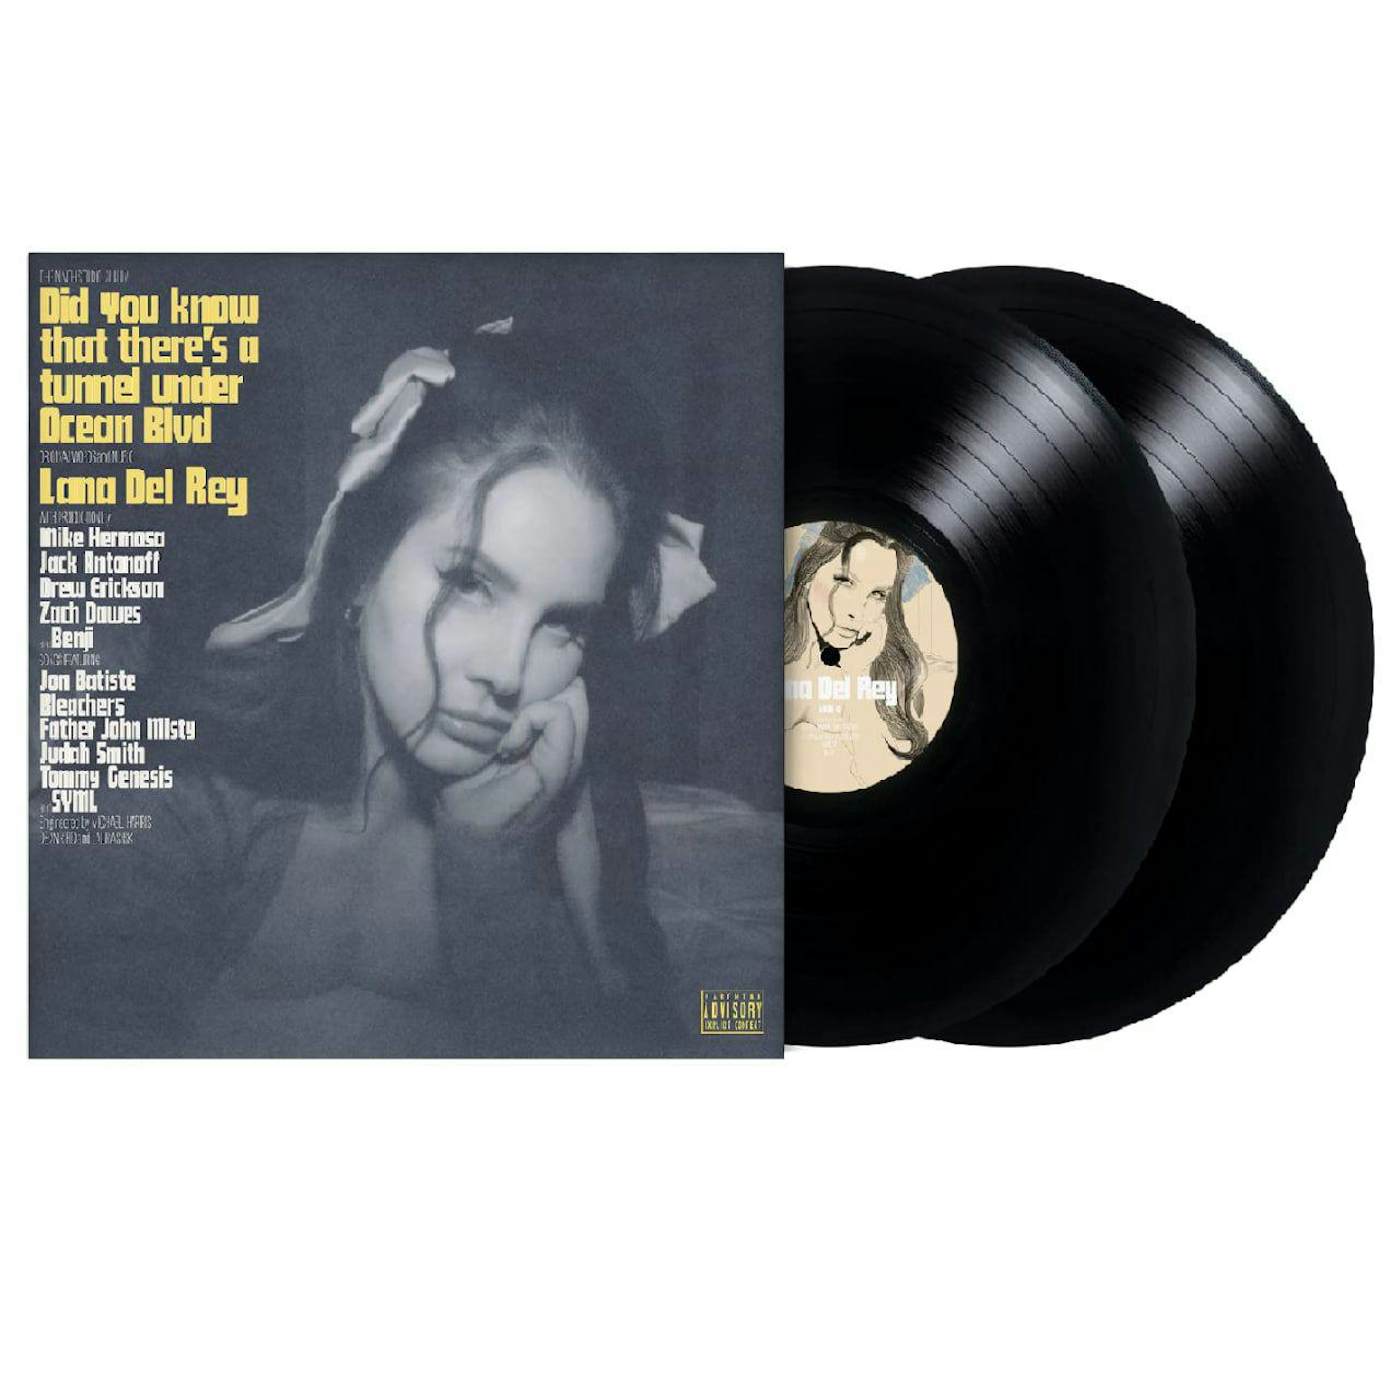 5 Lana Del Rey Button Buttons Mini 1 Inch Vinyl LP Album Covers Discography  Lot A -  Finland